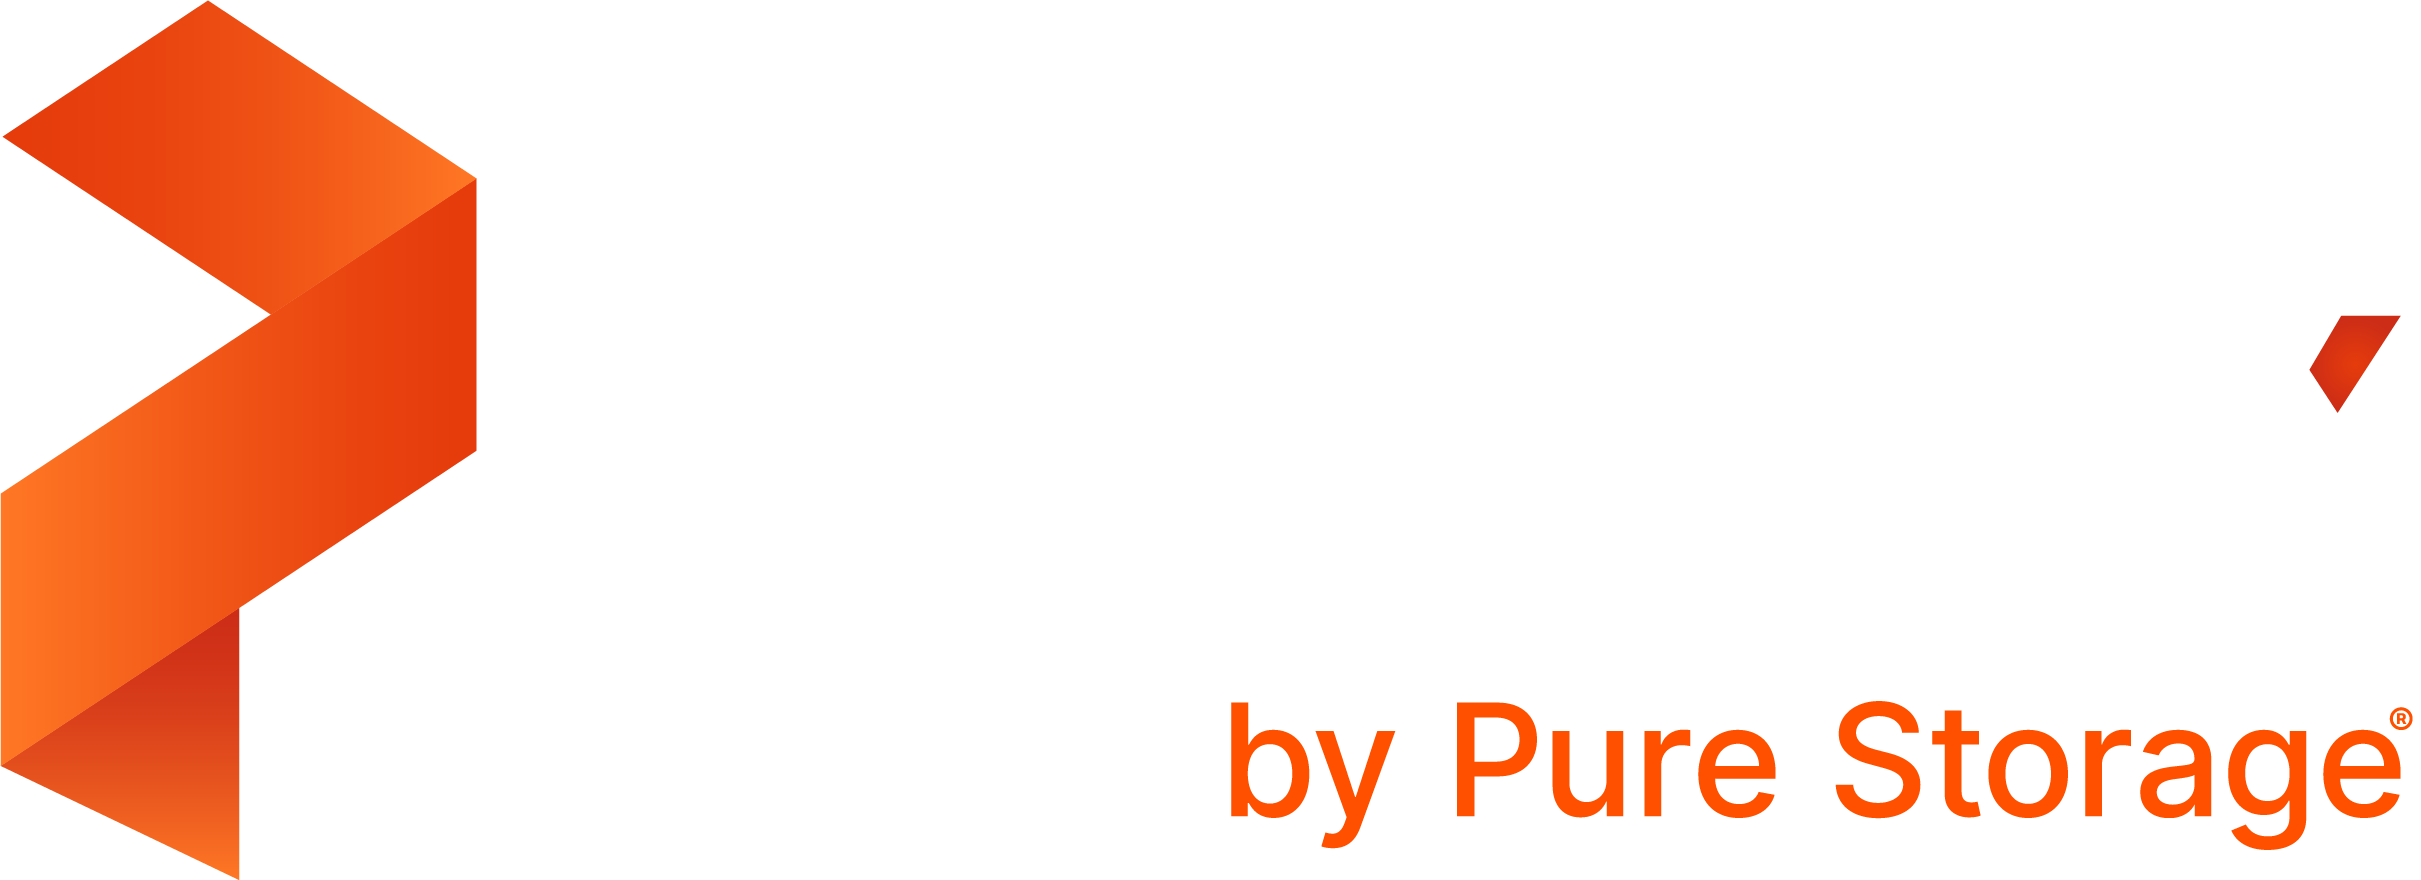 Portworx